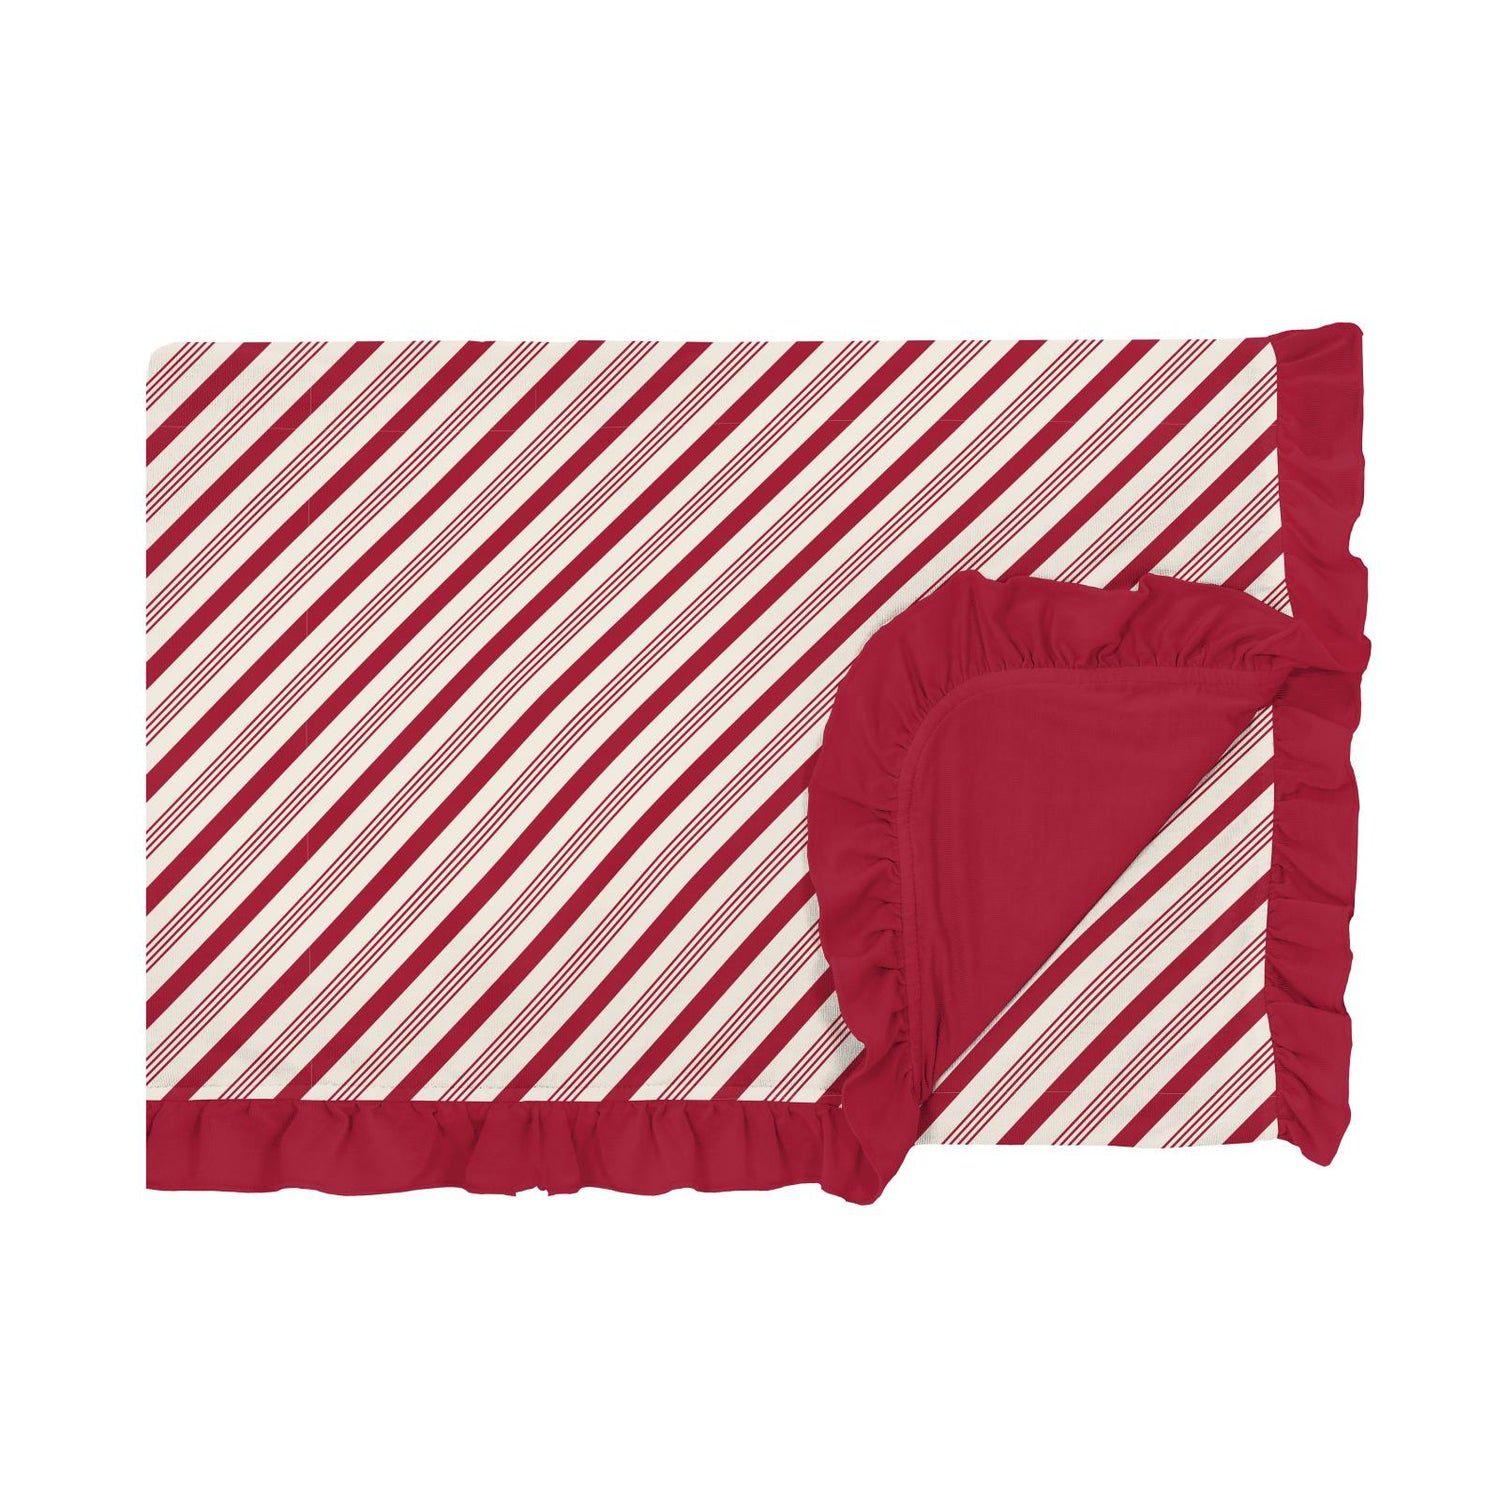 Print Ruffle Toddler Blanket in Crimson Candy Cane Stripe